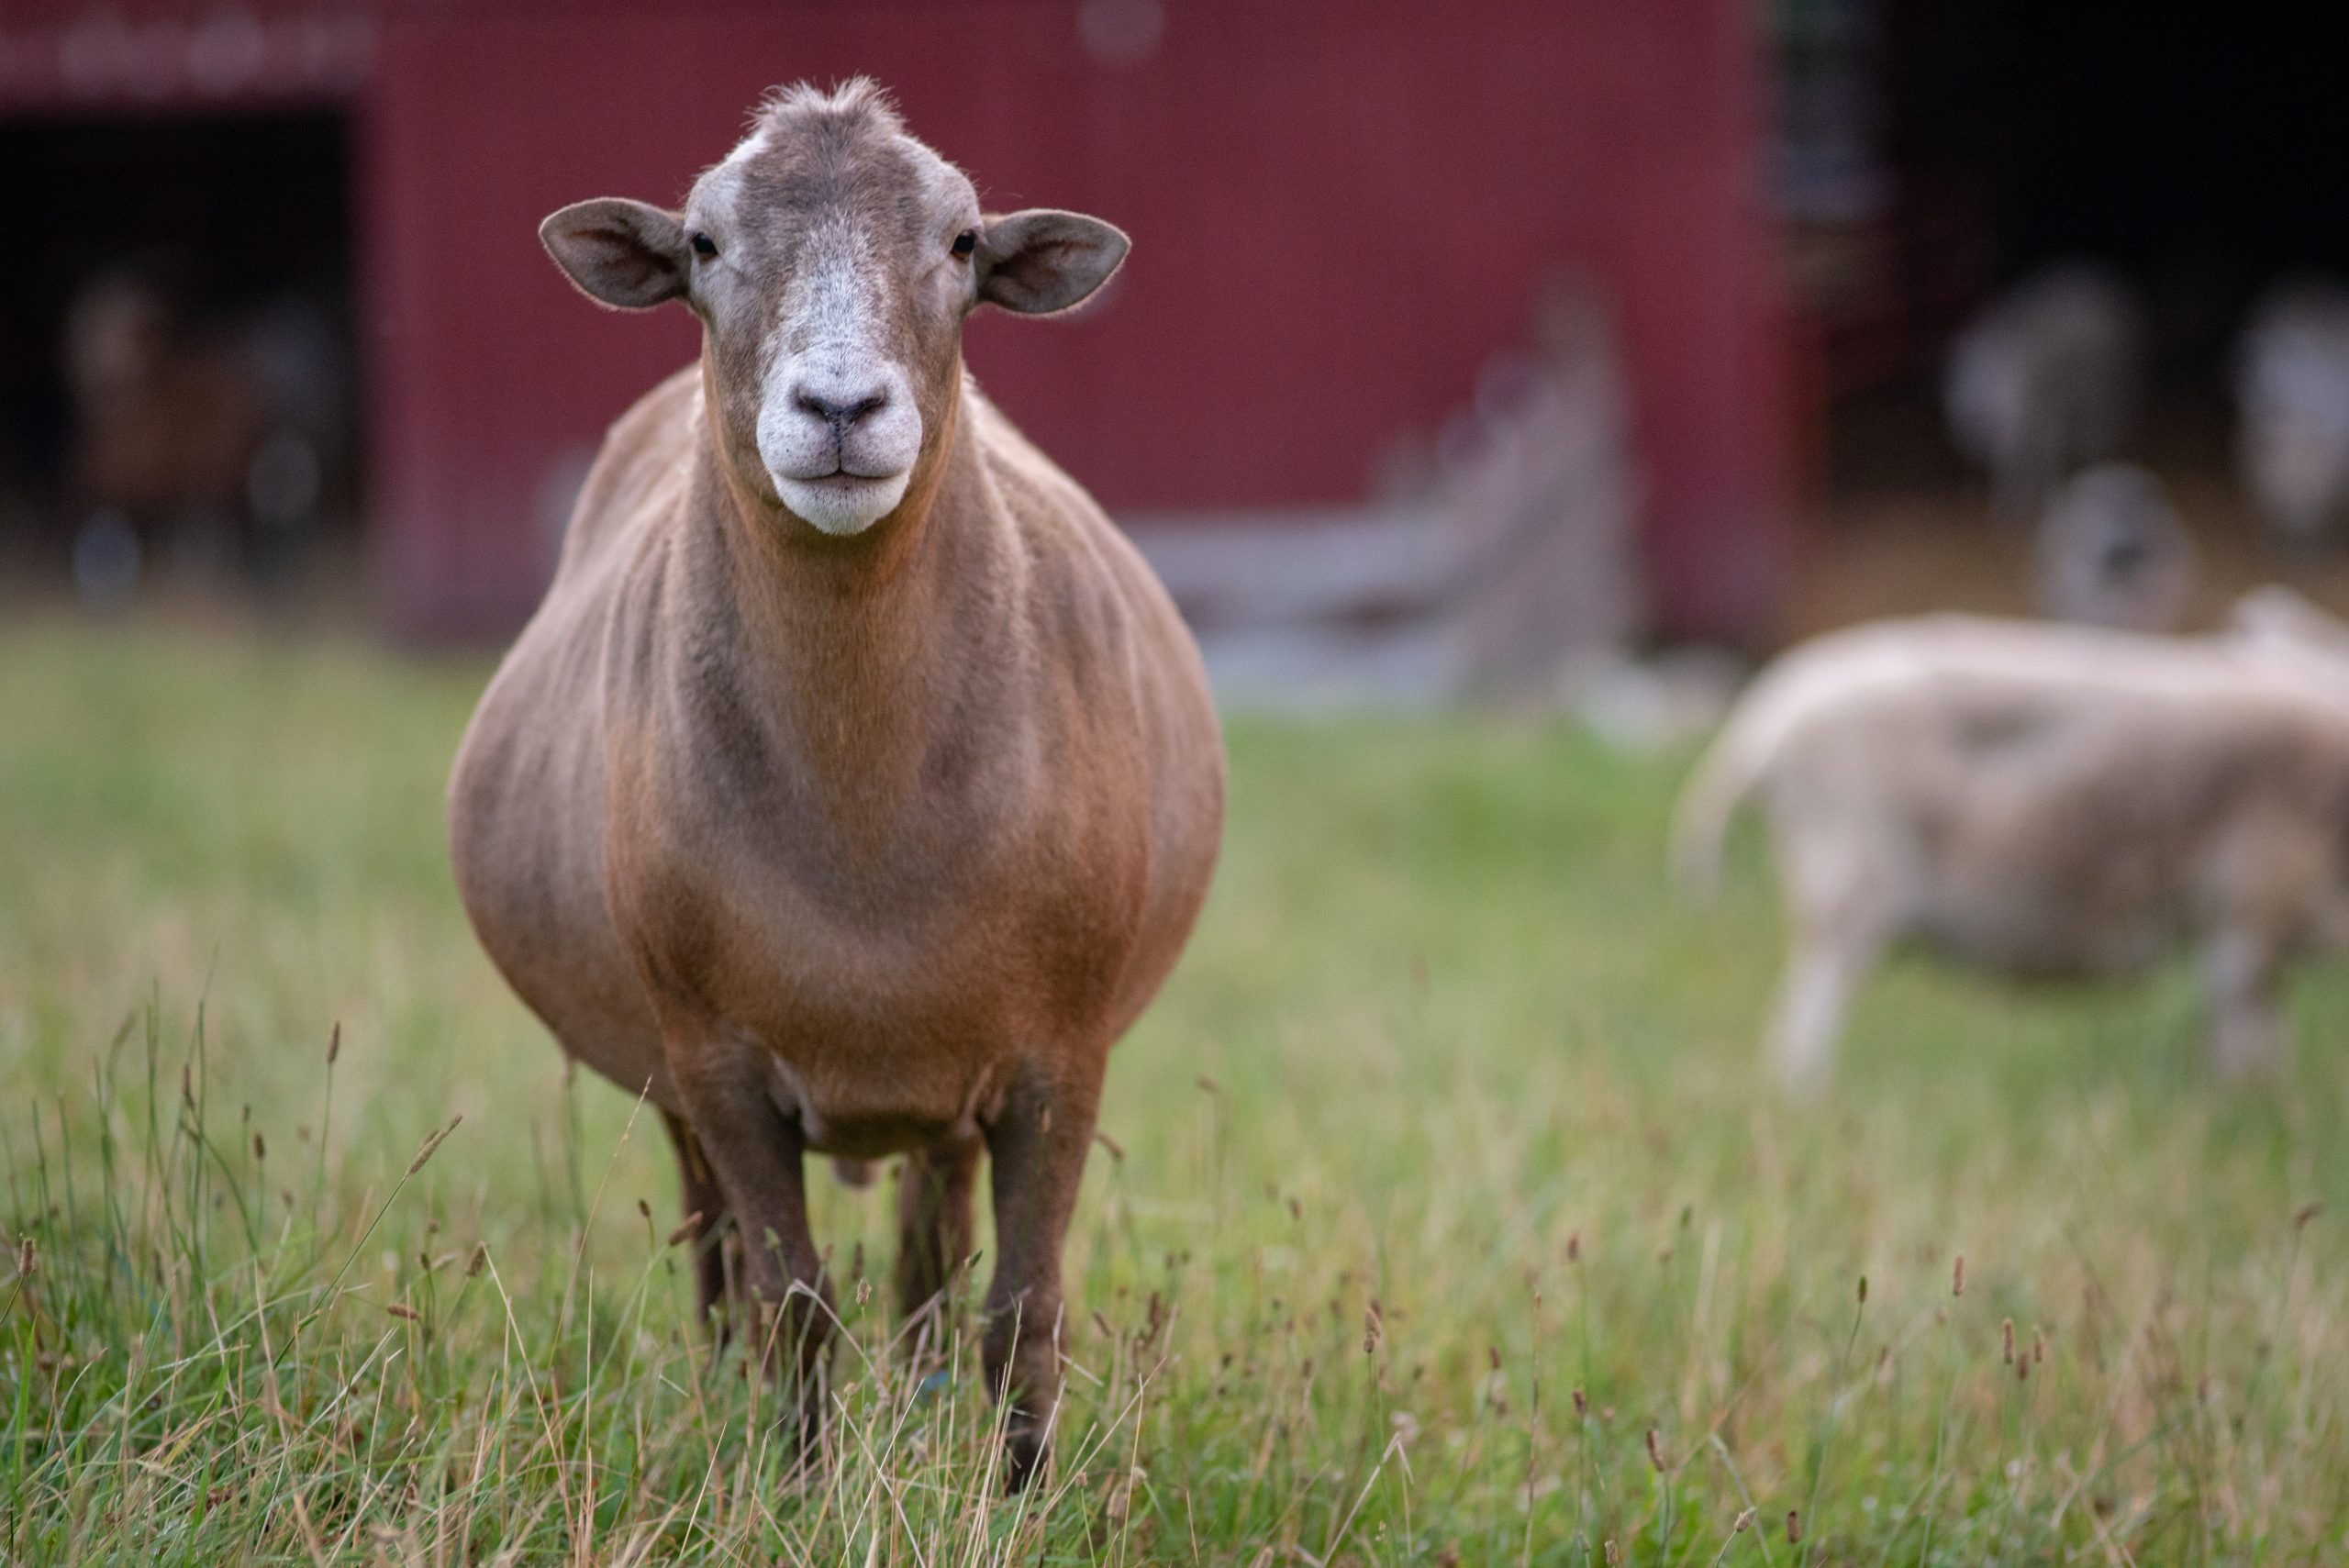 Gomax sheep at Farm Sanctuary